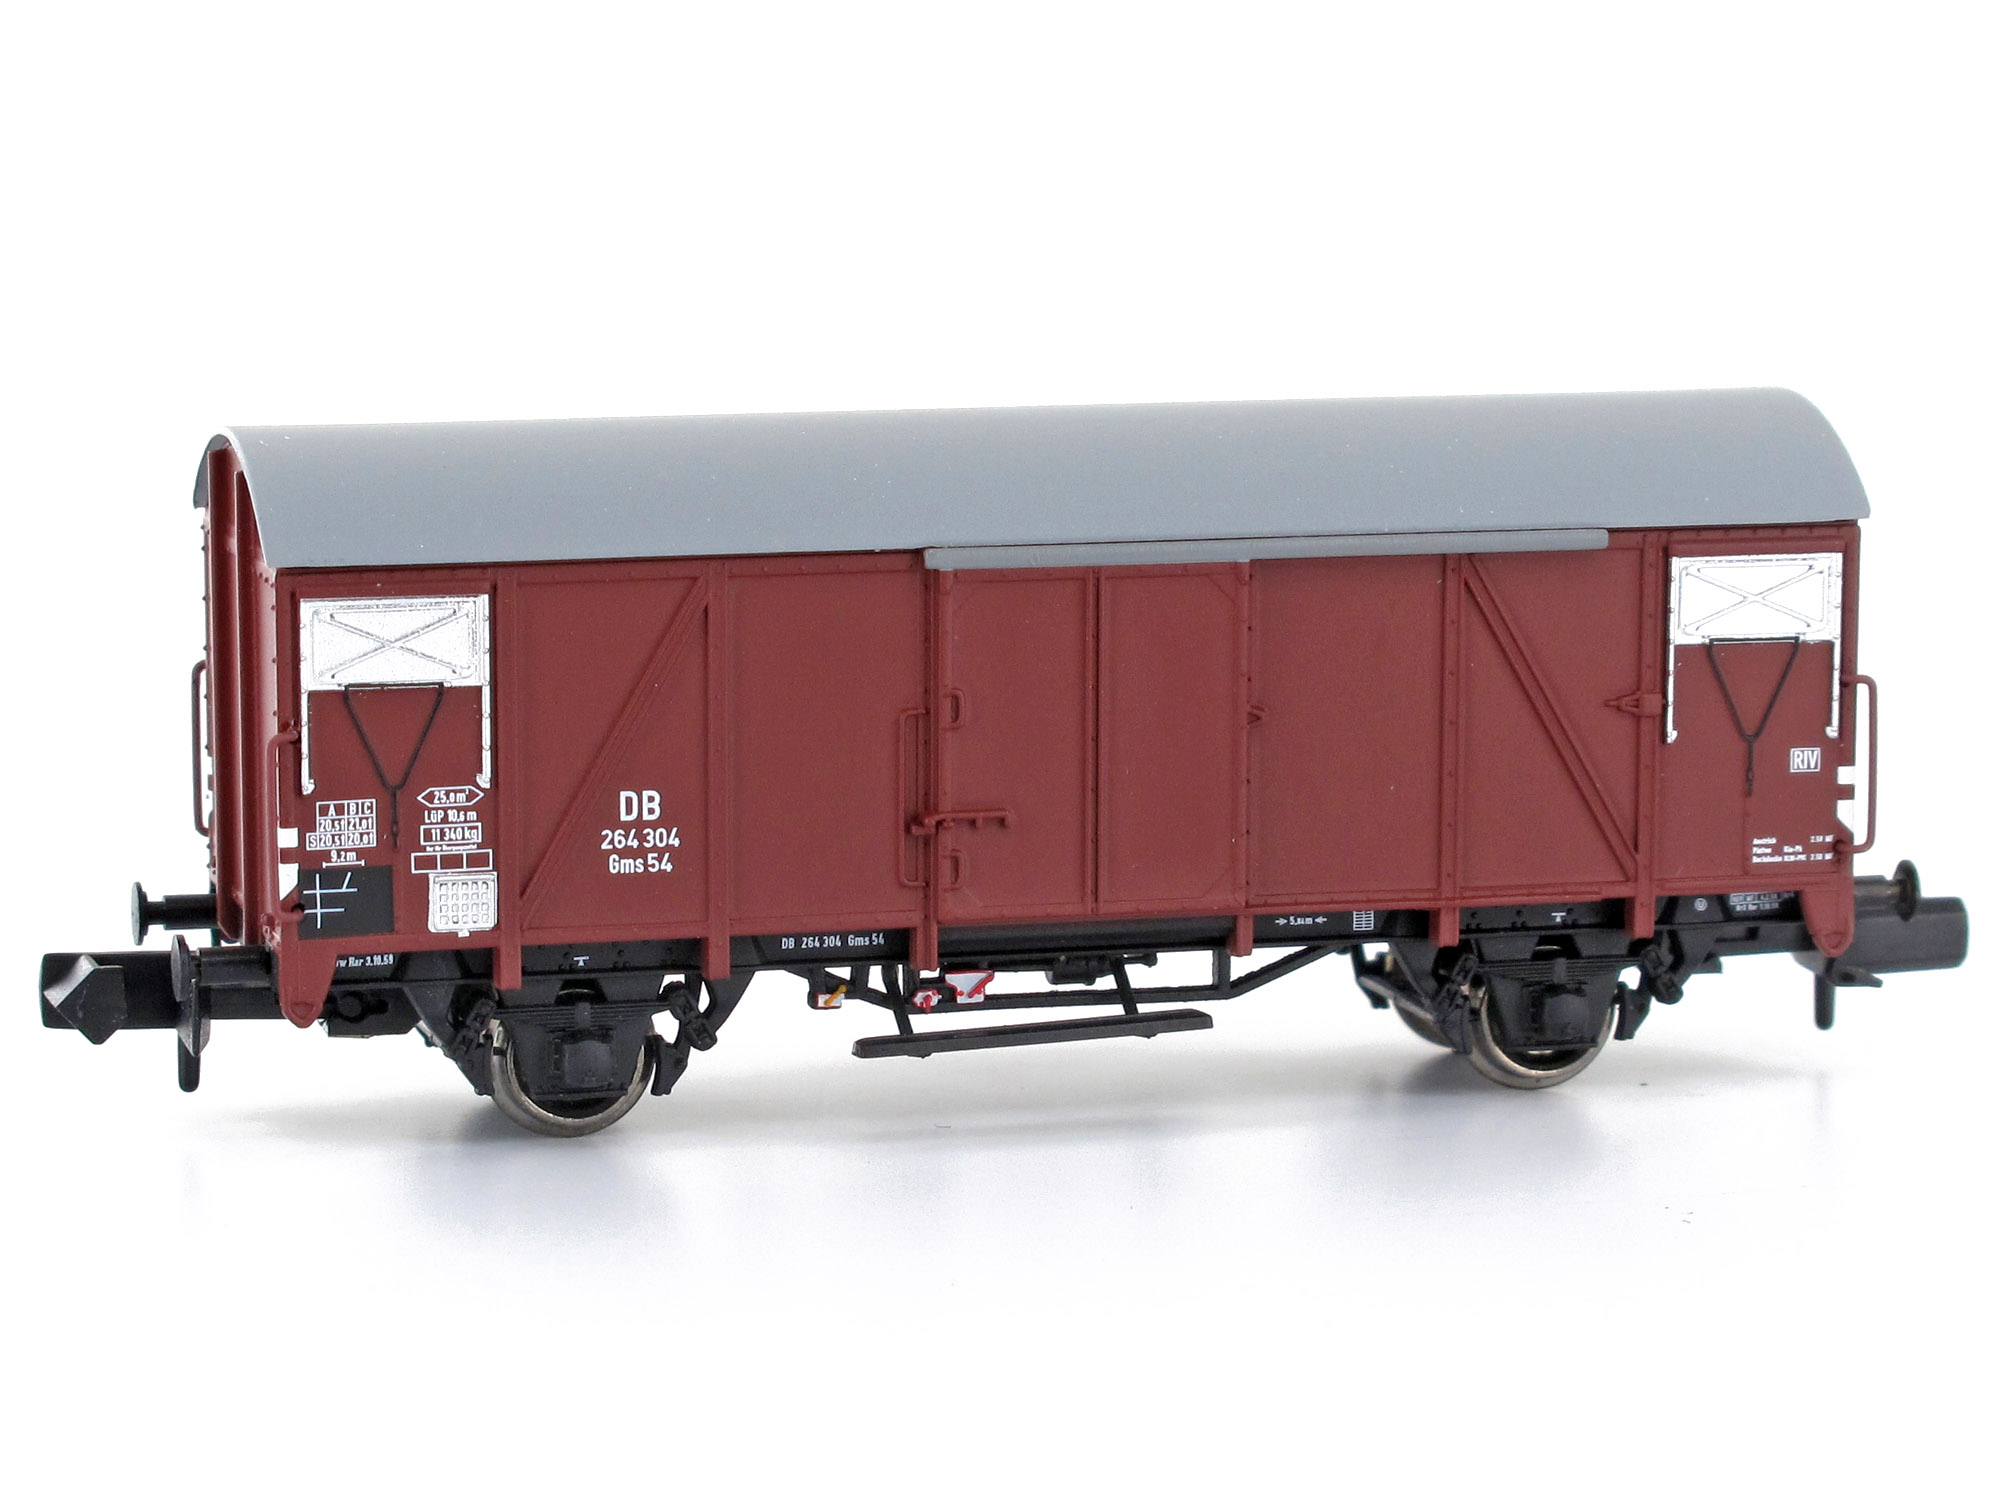 N Scale - Modellbahn Union - MU_N-G54102 - Covered wagon, Gms - Deutsche Bundesbahn - 264 304